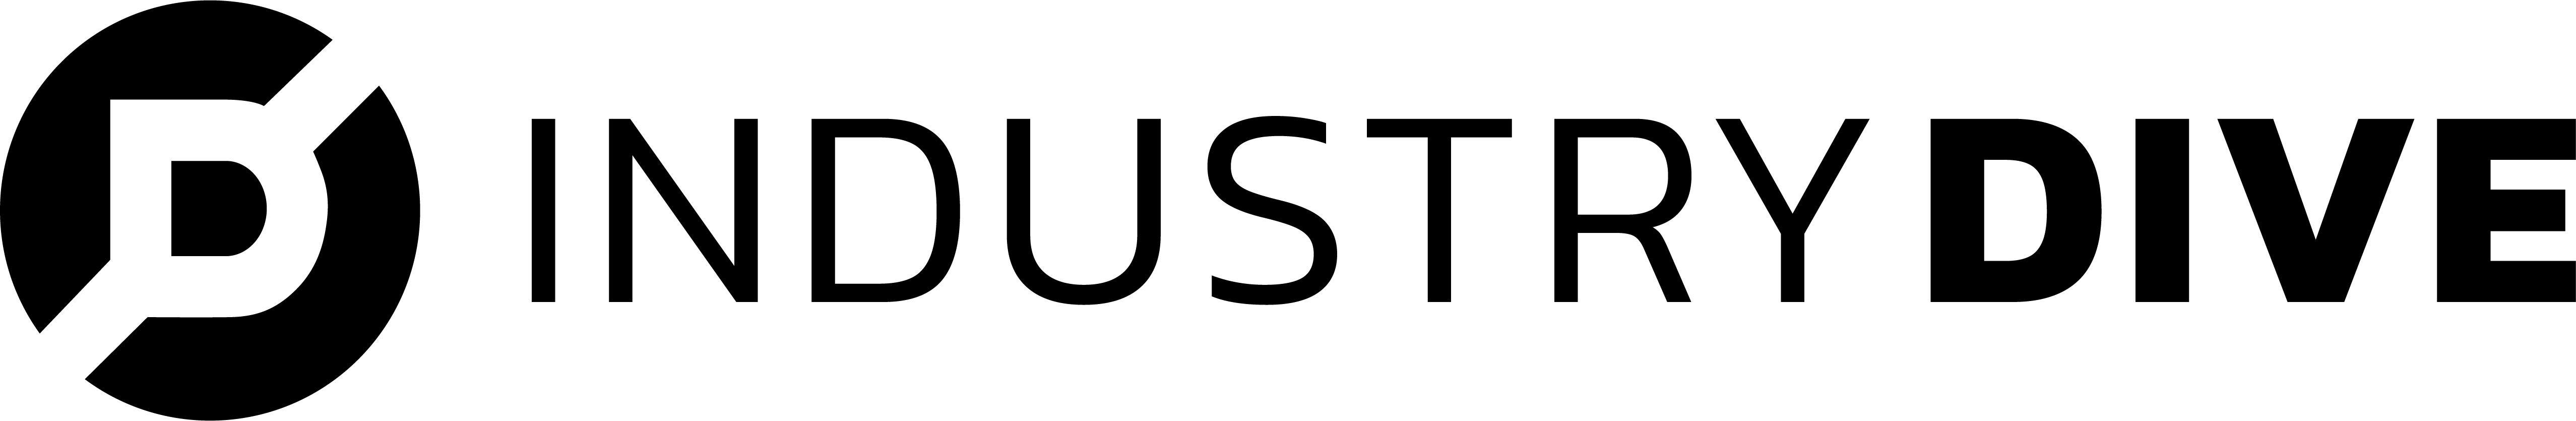 Industry Dive Company Logo